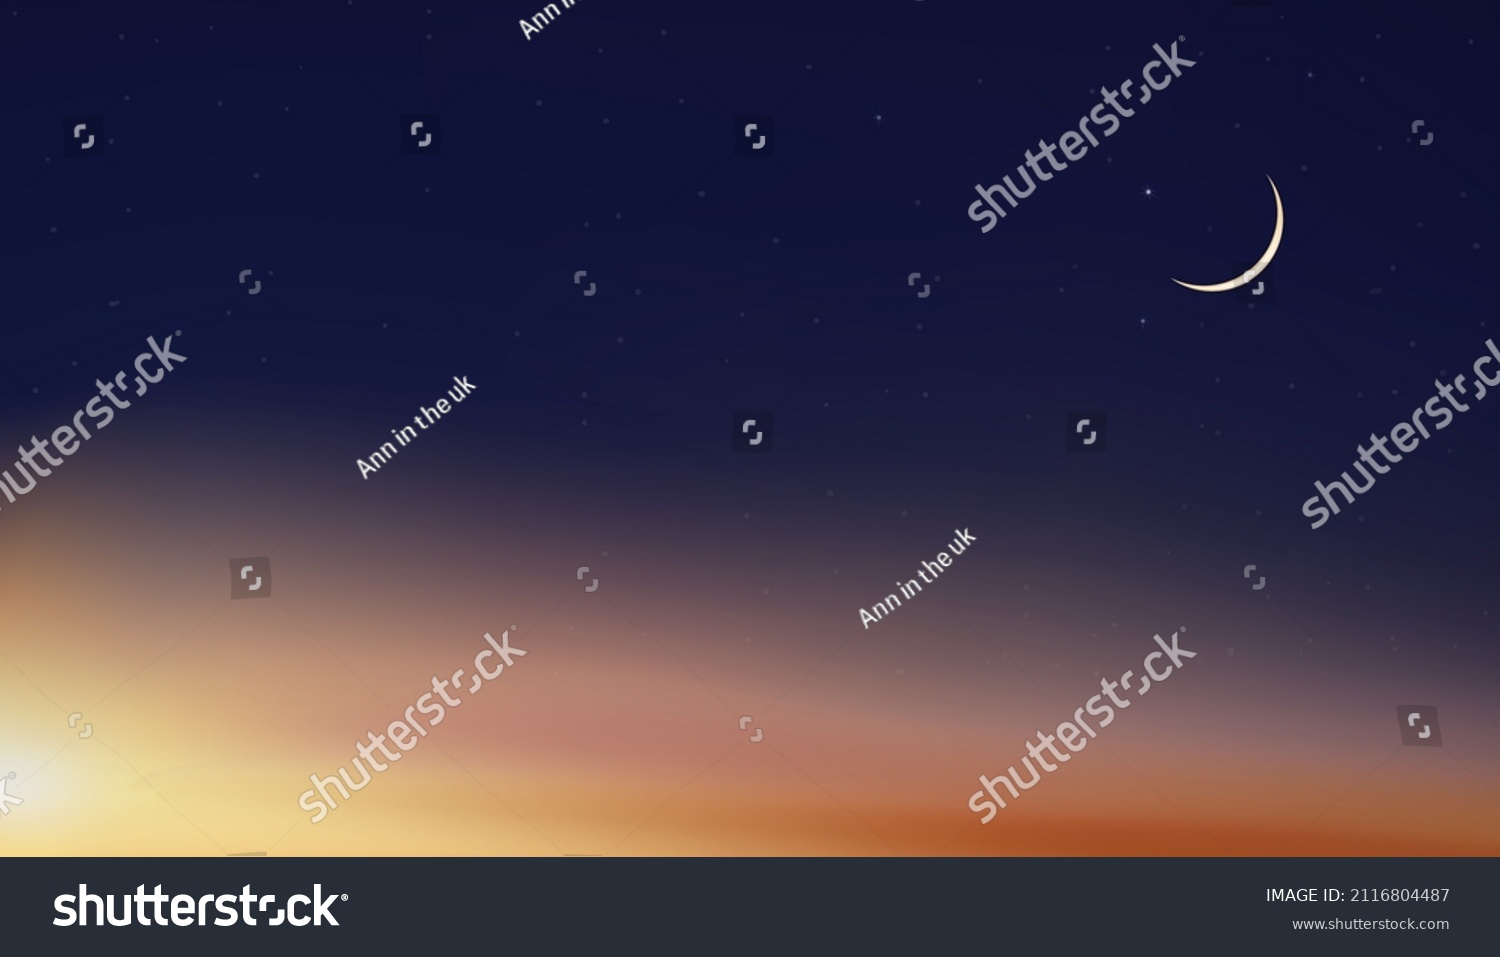 Sky Night,Ramadan Kareem Background with Crescent moon,Star with twilight dusk Sky,Vector Greeting festive for symbolic of Muslim culture ,Eid Mubarak,Eid al adha,Eid al fitr,Islamic new year,Muharram #2116804487